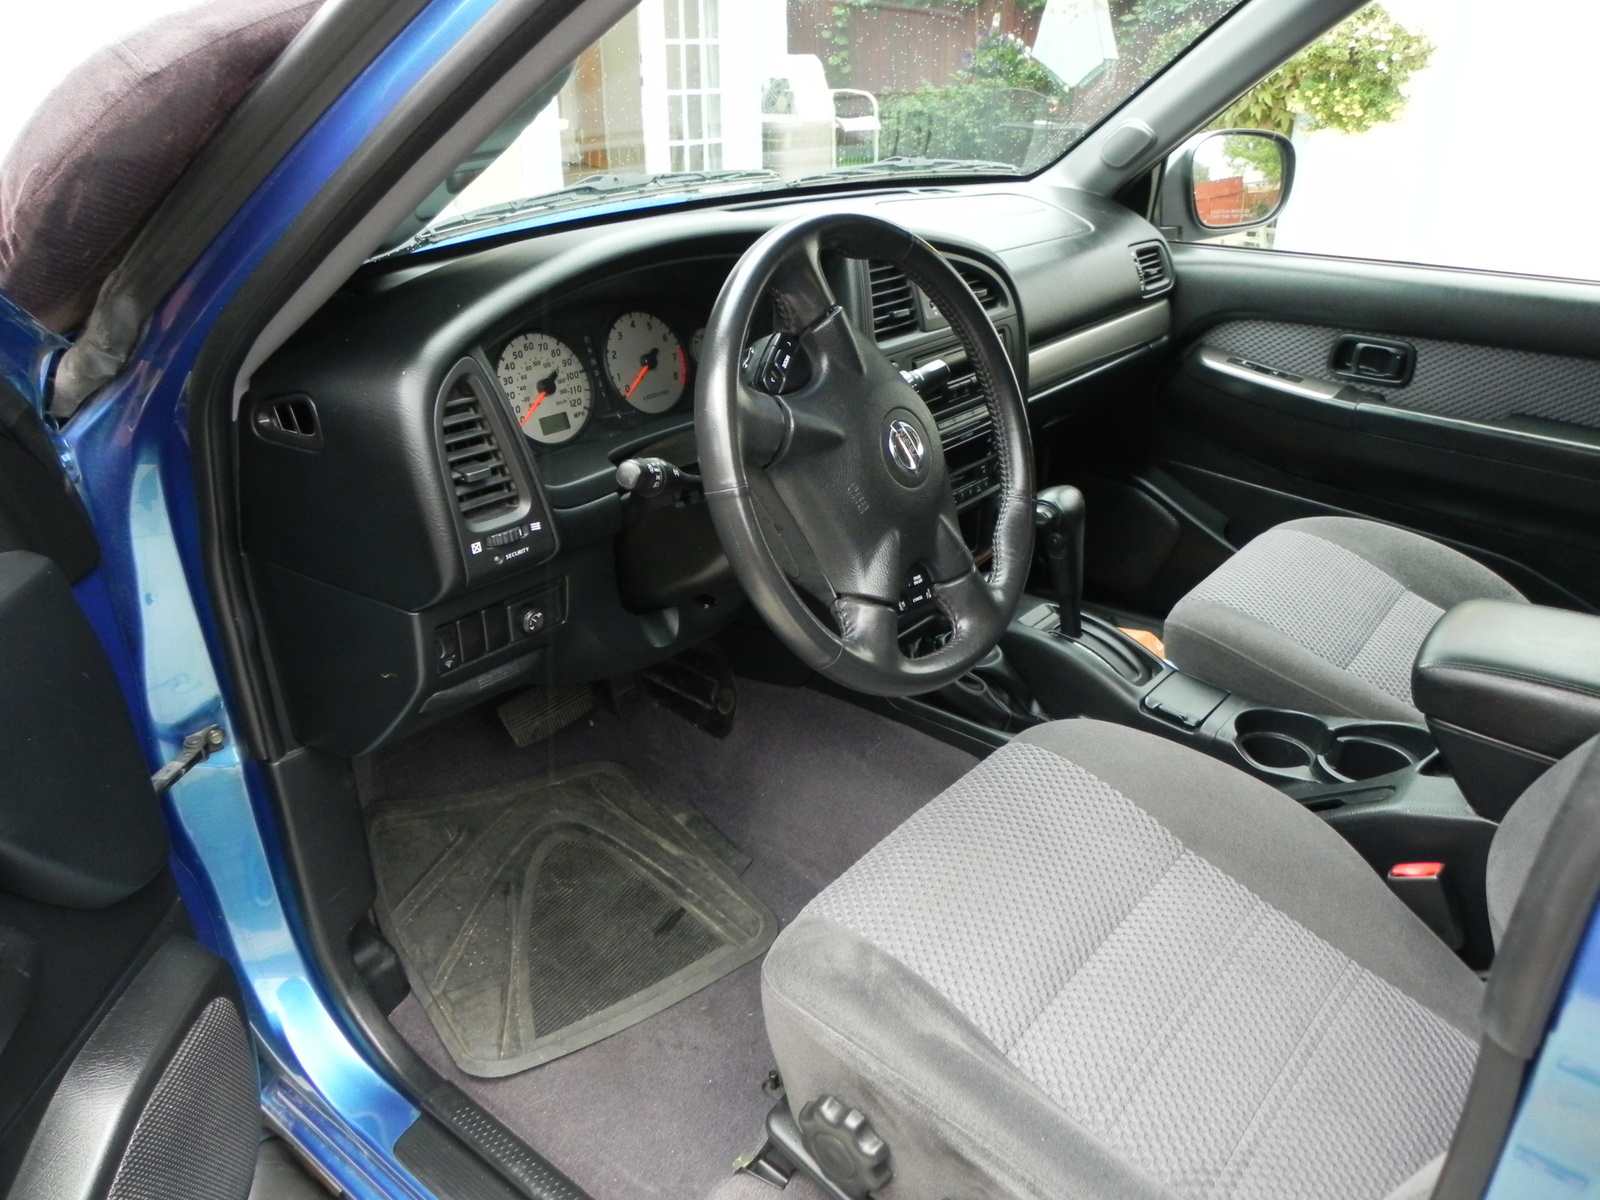 2003 Nissan pathfinder interior dimensions #3